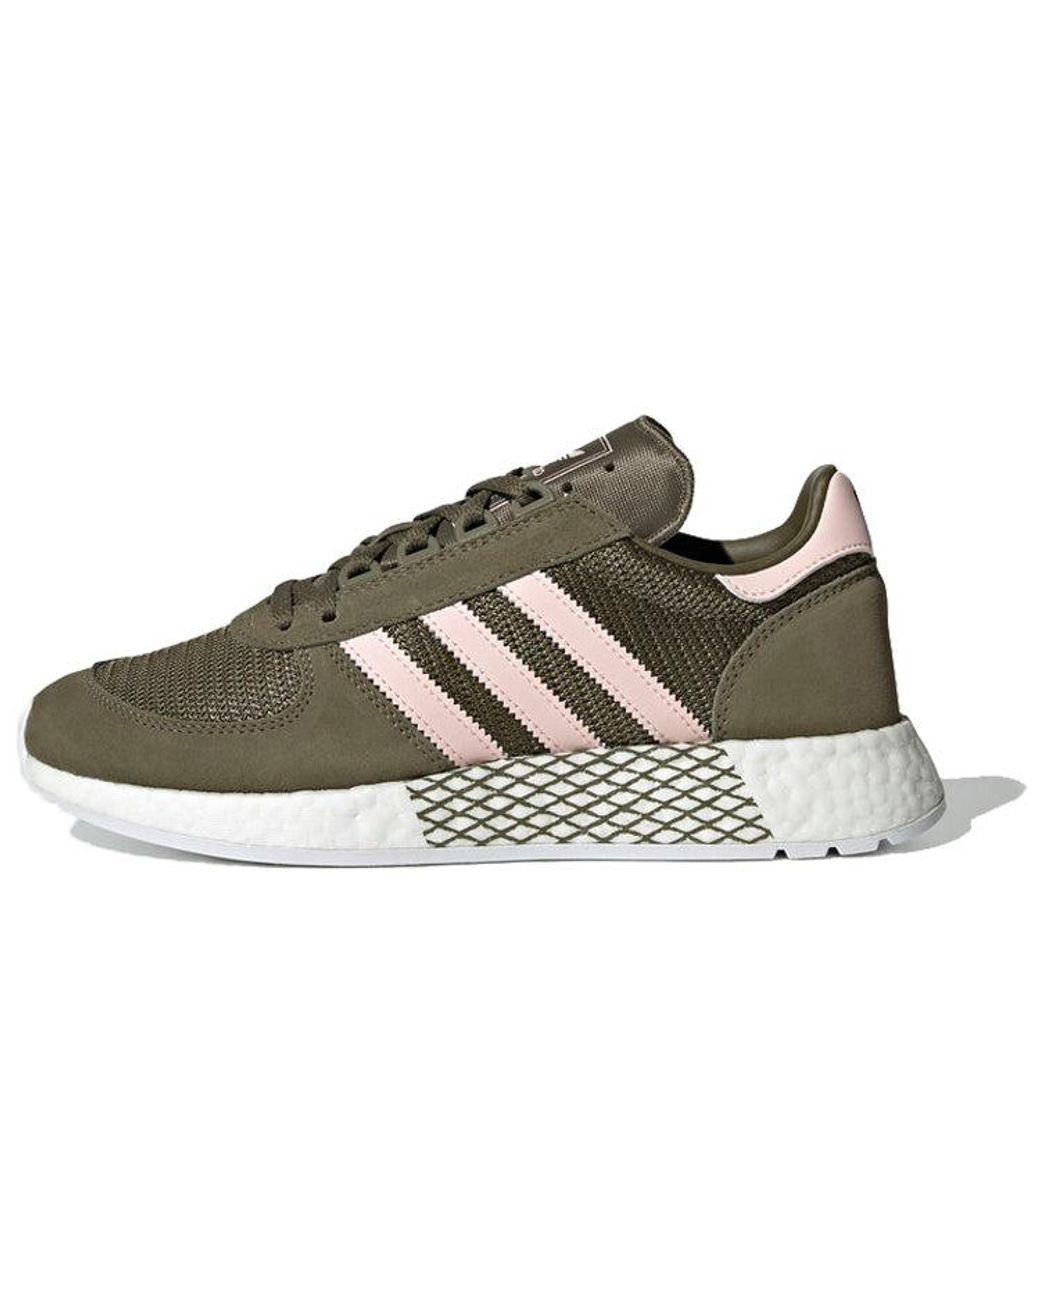 adidas Originals Marathon Tech Shoes Brown/green/pink | Lyst